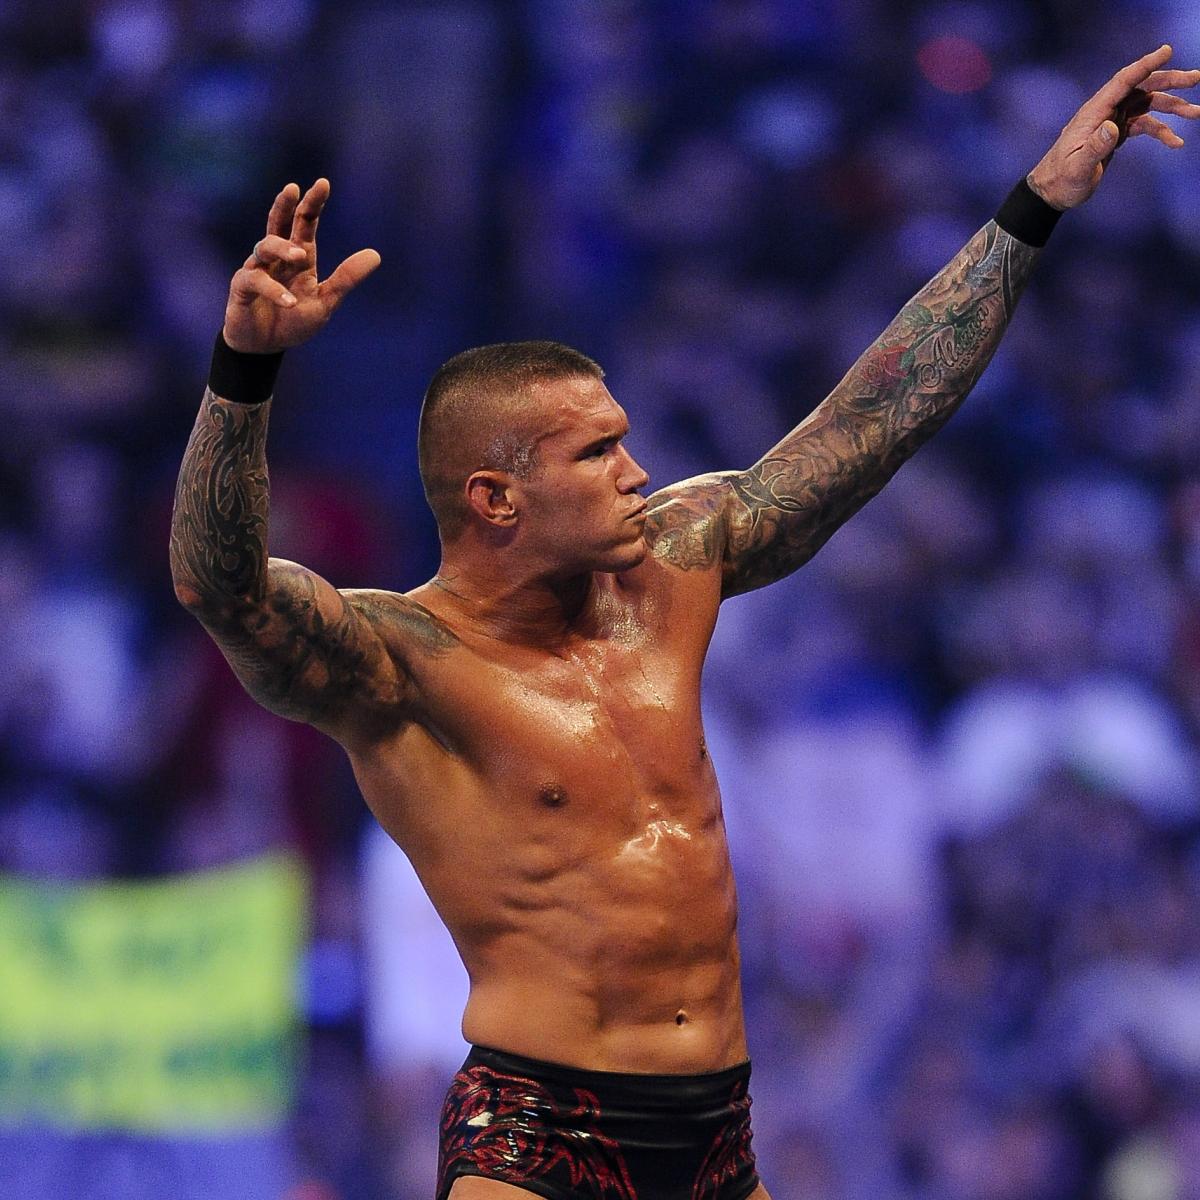 Randy Orton, Edge to Kick Off 2021 WWE Males’s Royal Rumble as 1st 2 Entrants